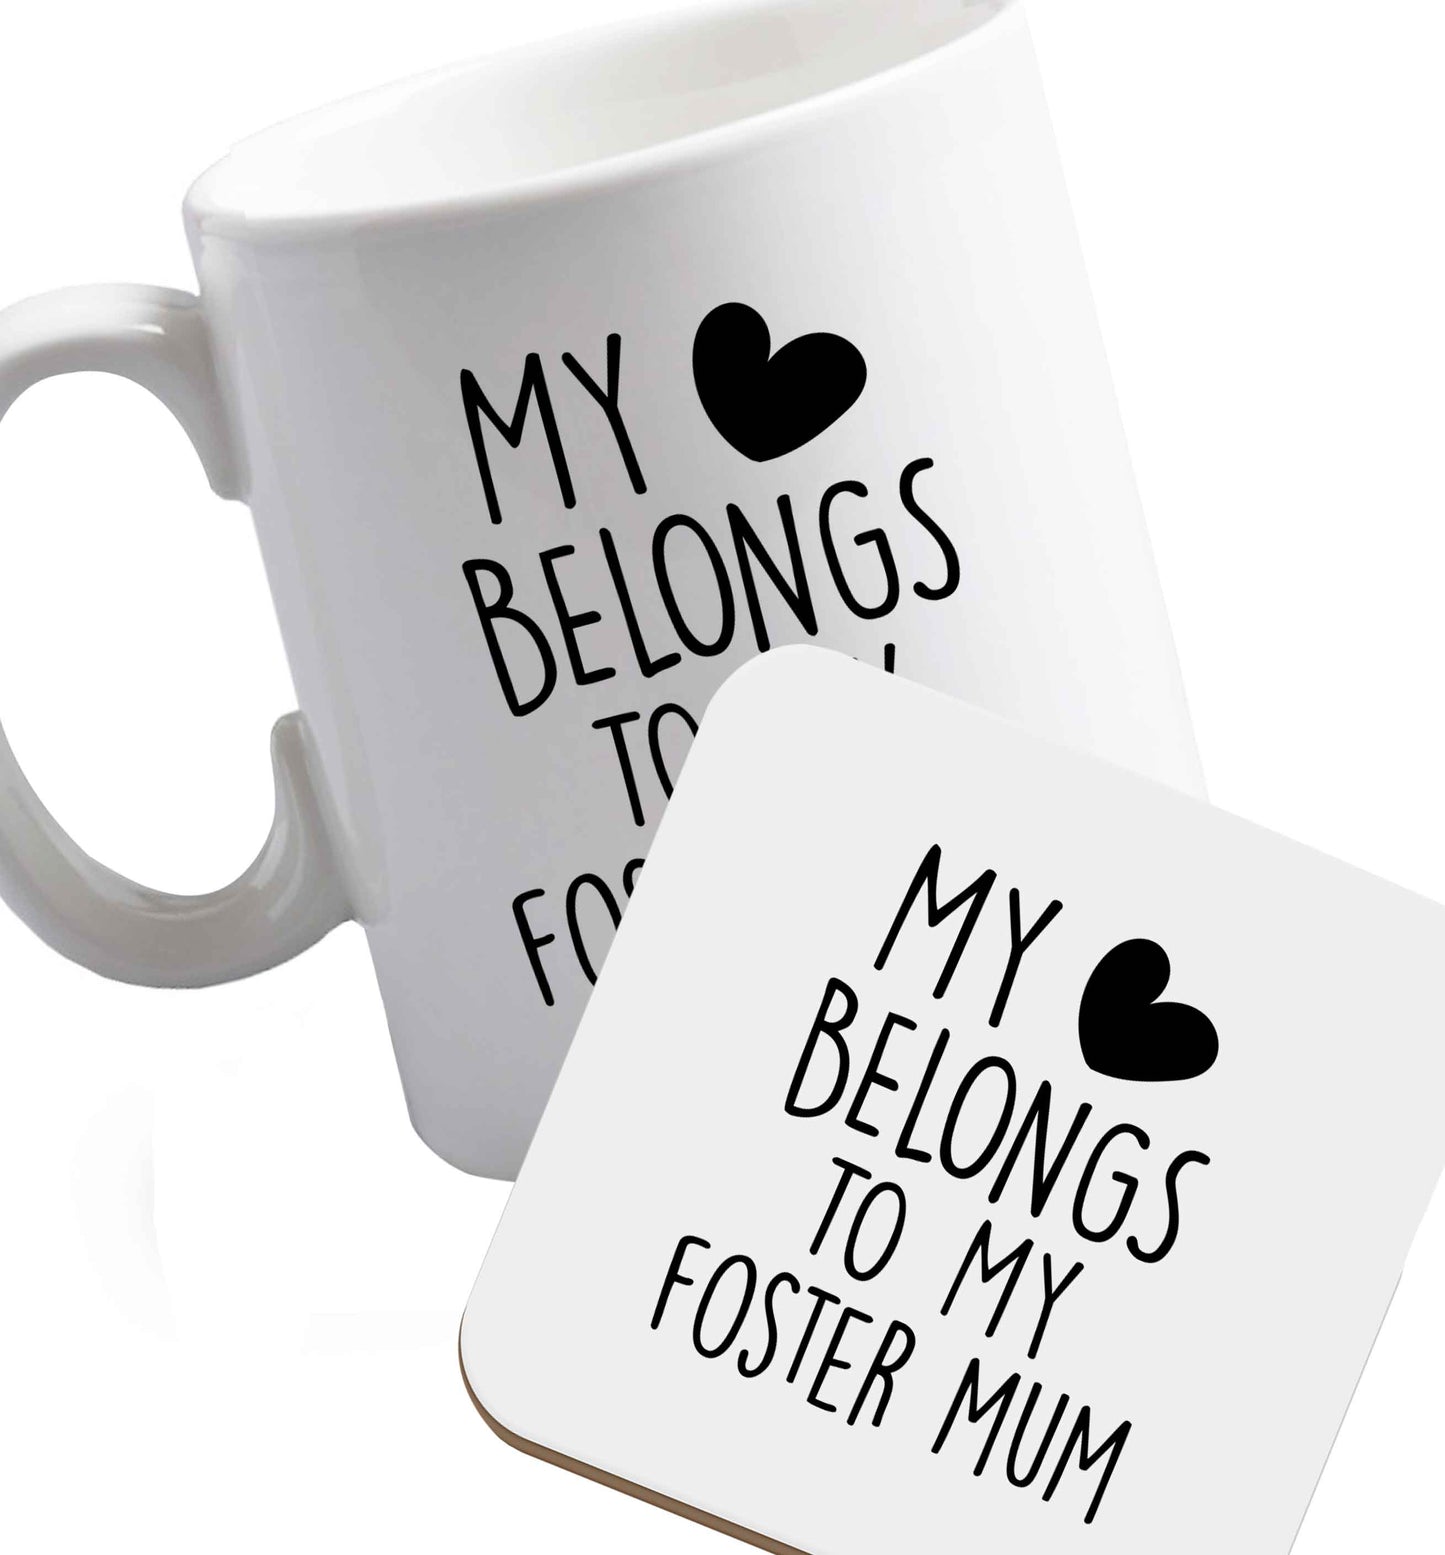 10 oz My heart belongs to my foster mum ceramic mug and coaster set right handed